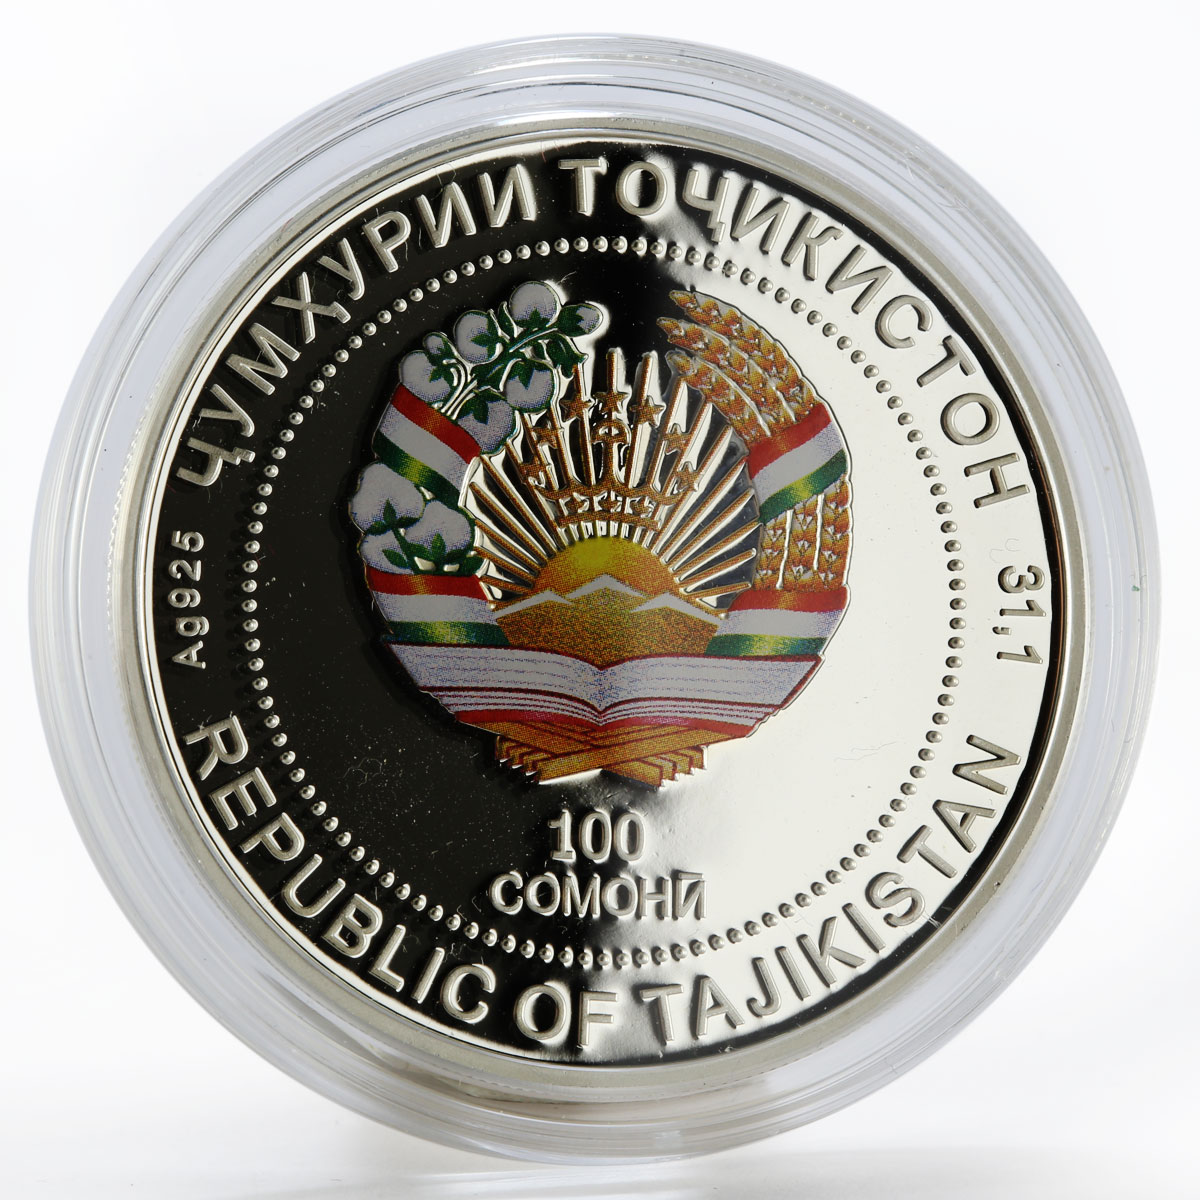 Tajikistan 100 somoni 5500 Anniversary of Sarazm silver colored proof coin 2013